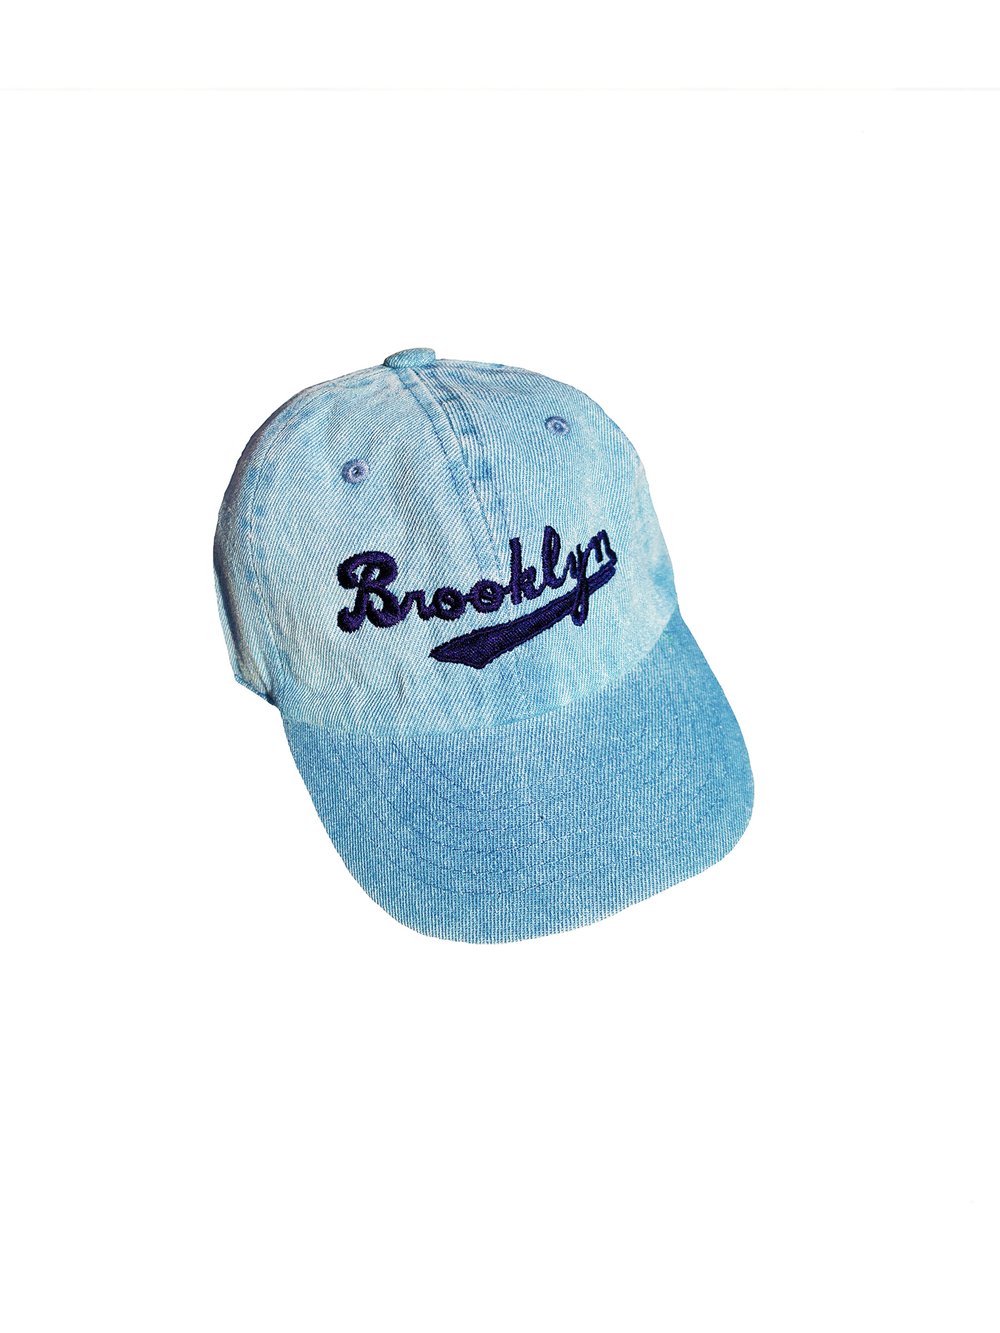 Toddlers Brooklyn Script Denim Baseball Cap. Special Edition. —  brooklynite designs.